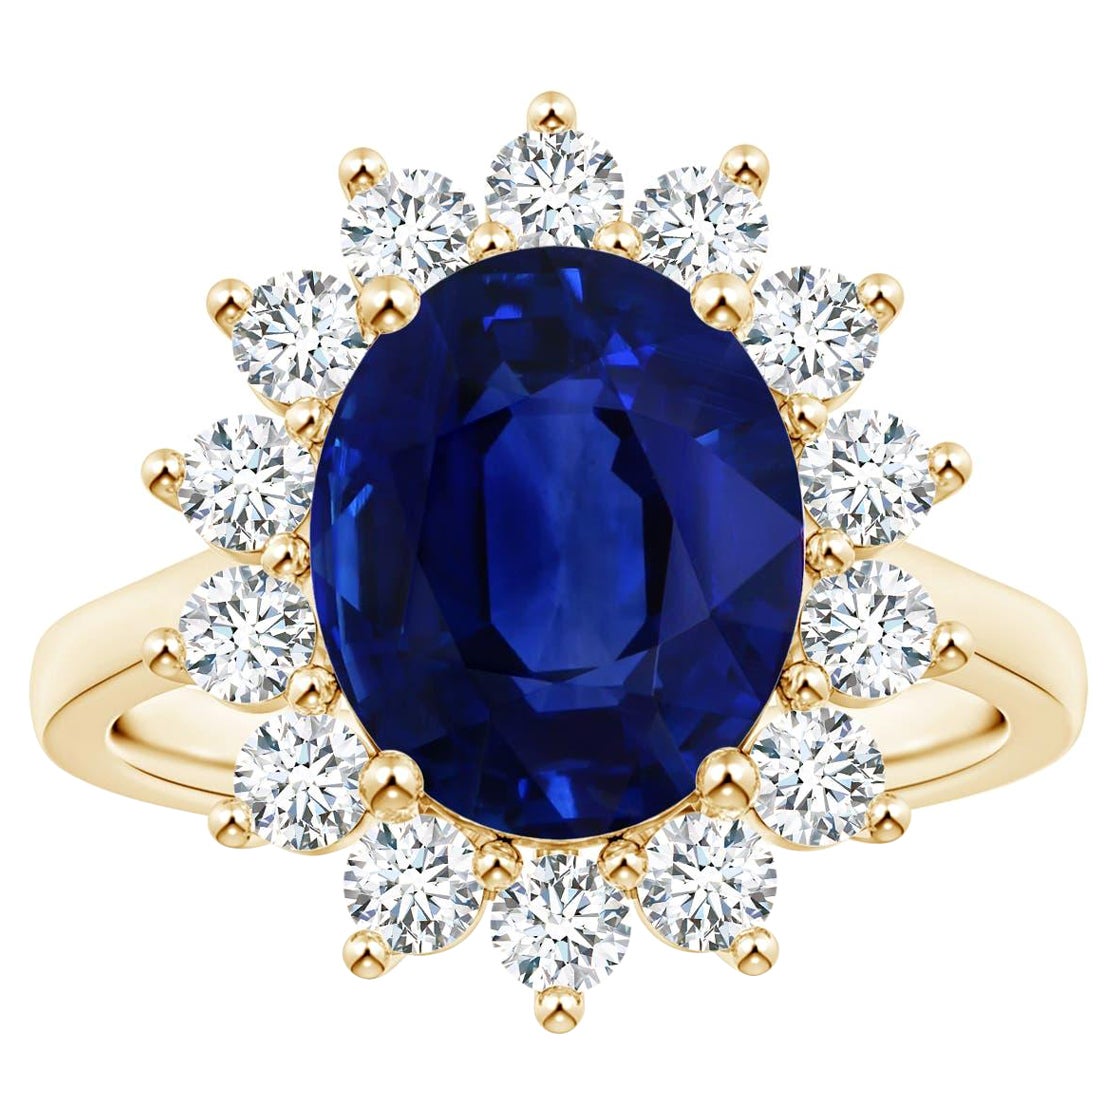 ANGARA Prinzessin Diana inspirierter GIA-zertifizierter Saphir-Halo-Ring aus Gelbgold